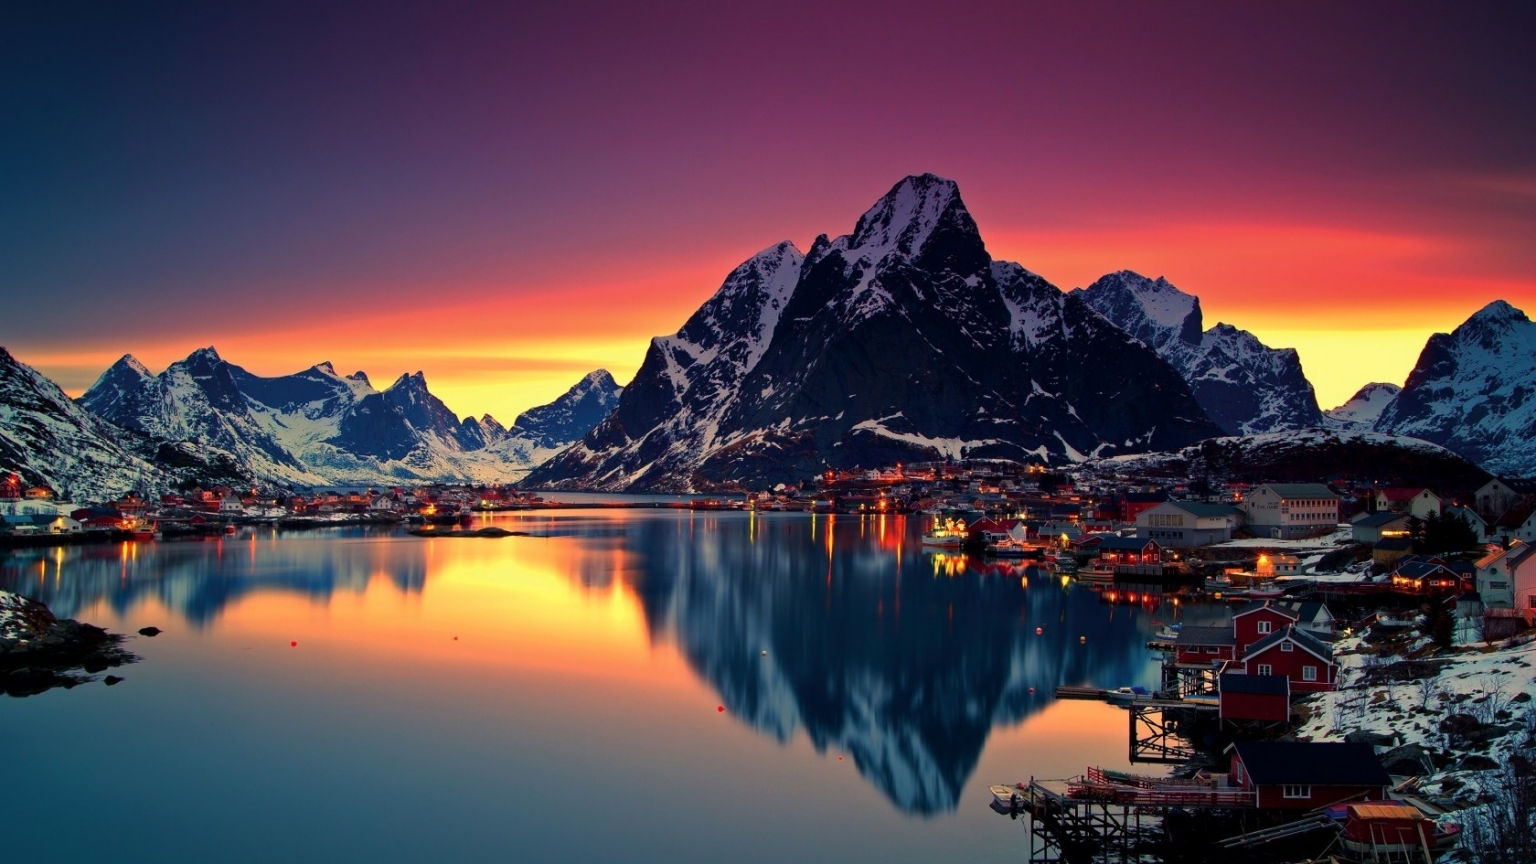 Night Lofoten Islands Norway for 1536 x 864 HDTV resolution